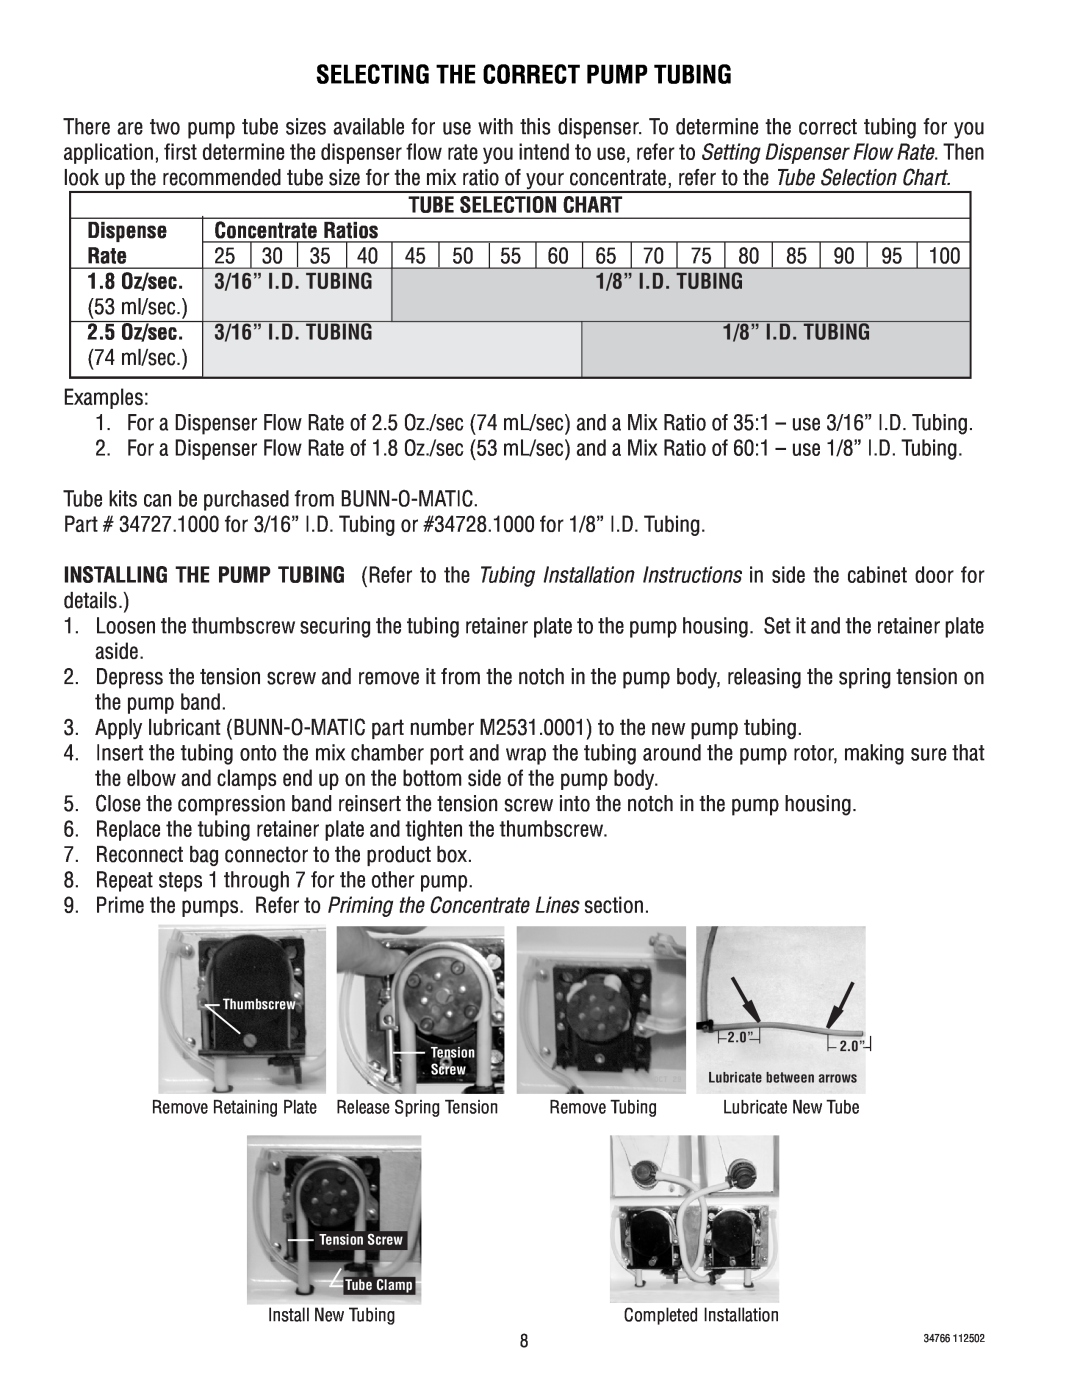 Bunn 34766.0000S manual Selecting The Correct Pump Tubing, Dispense, Rate, 1.8 Oz/sec, 3/16” I.D. TUBING, 1/8” I.D. TUBING 